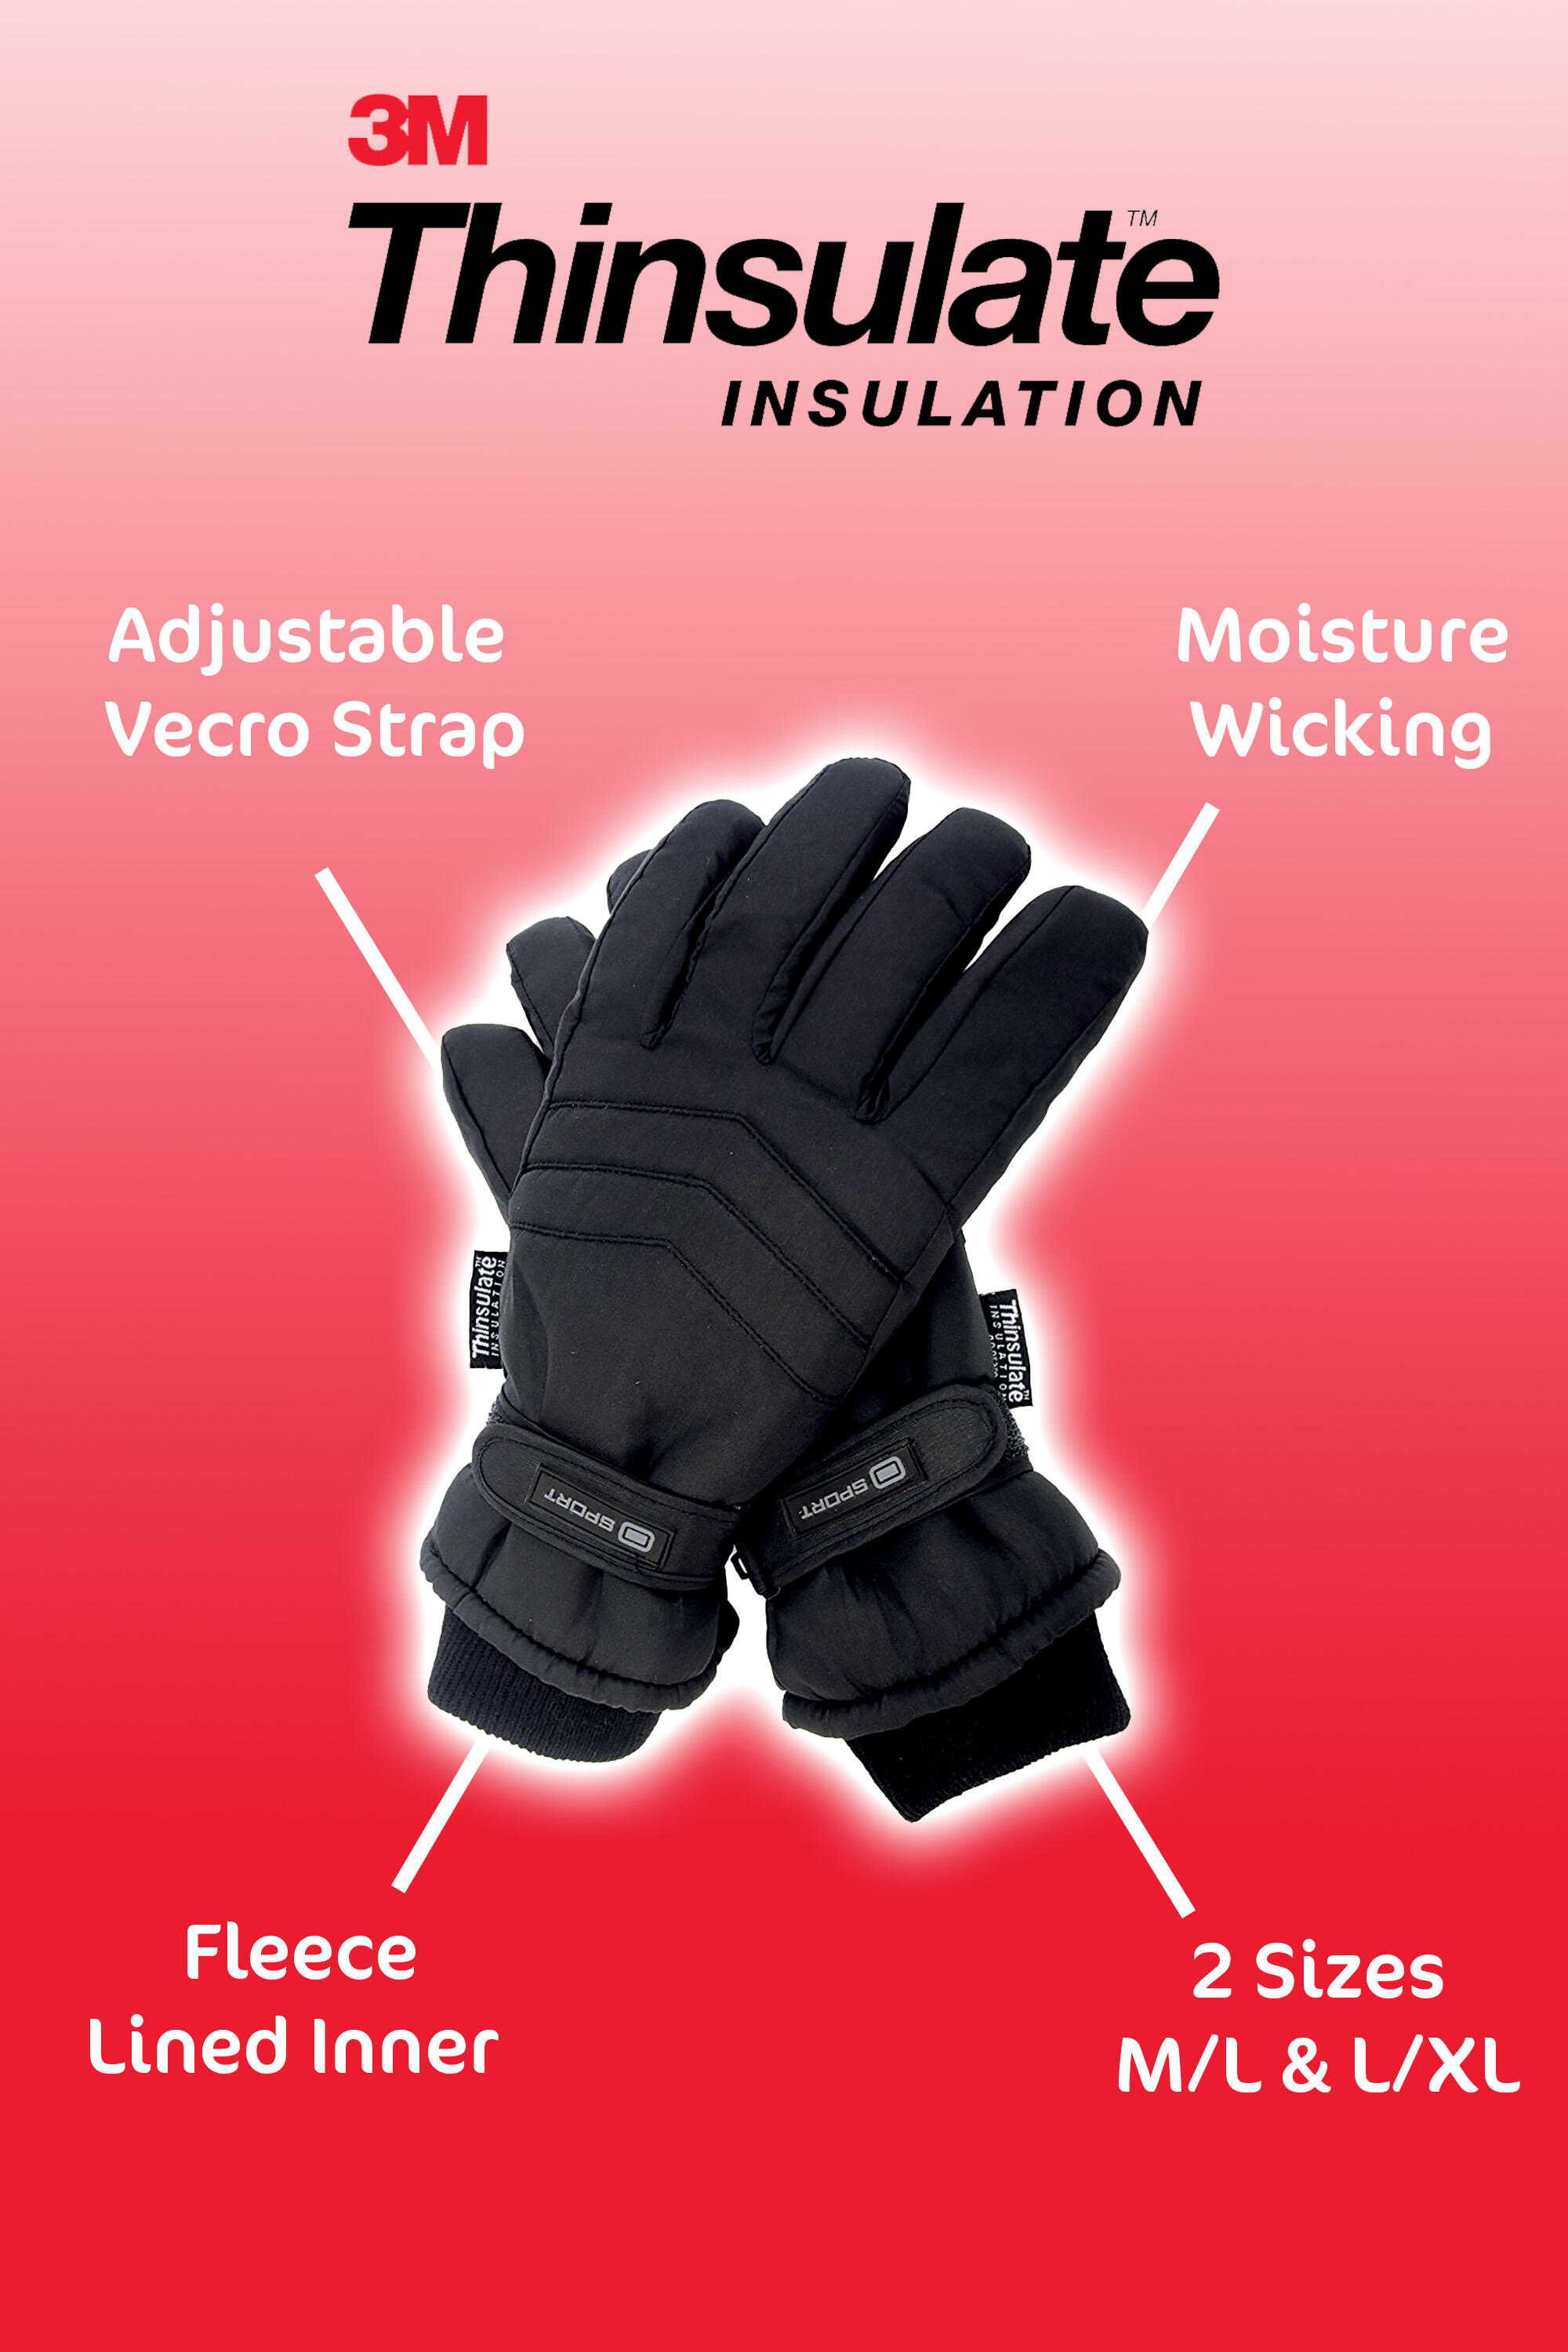 Mens 3M Thinsulate 40 gram Thermal Insulated Waterproof Ski Gloves 3/6